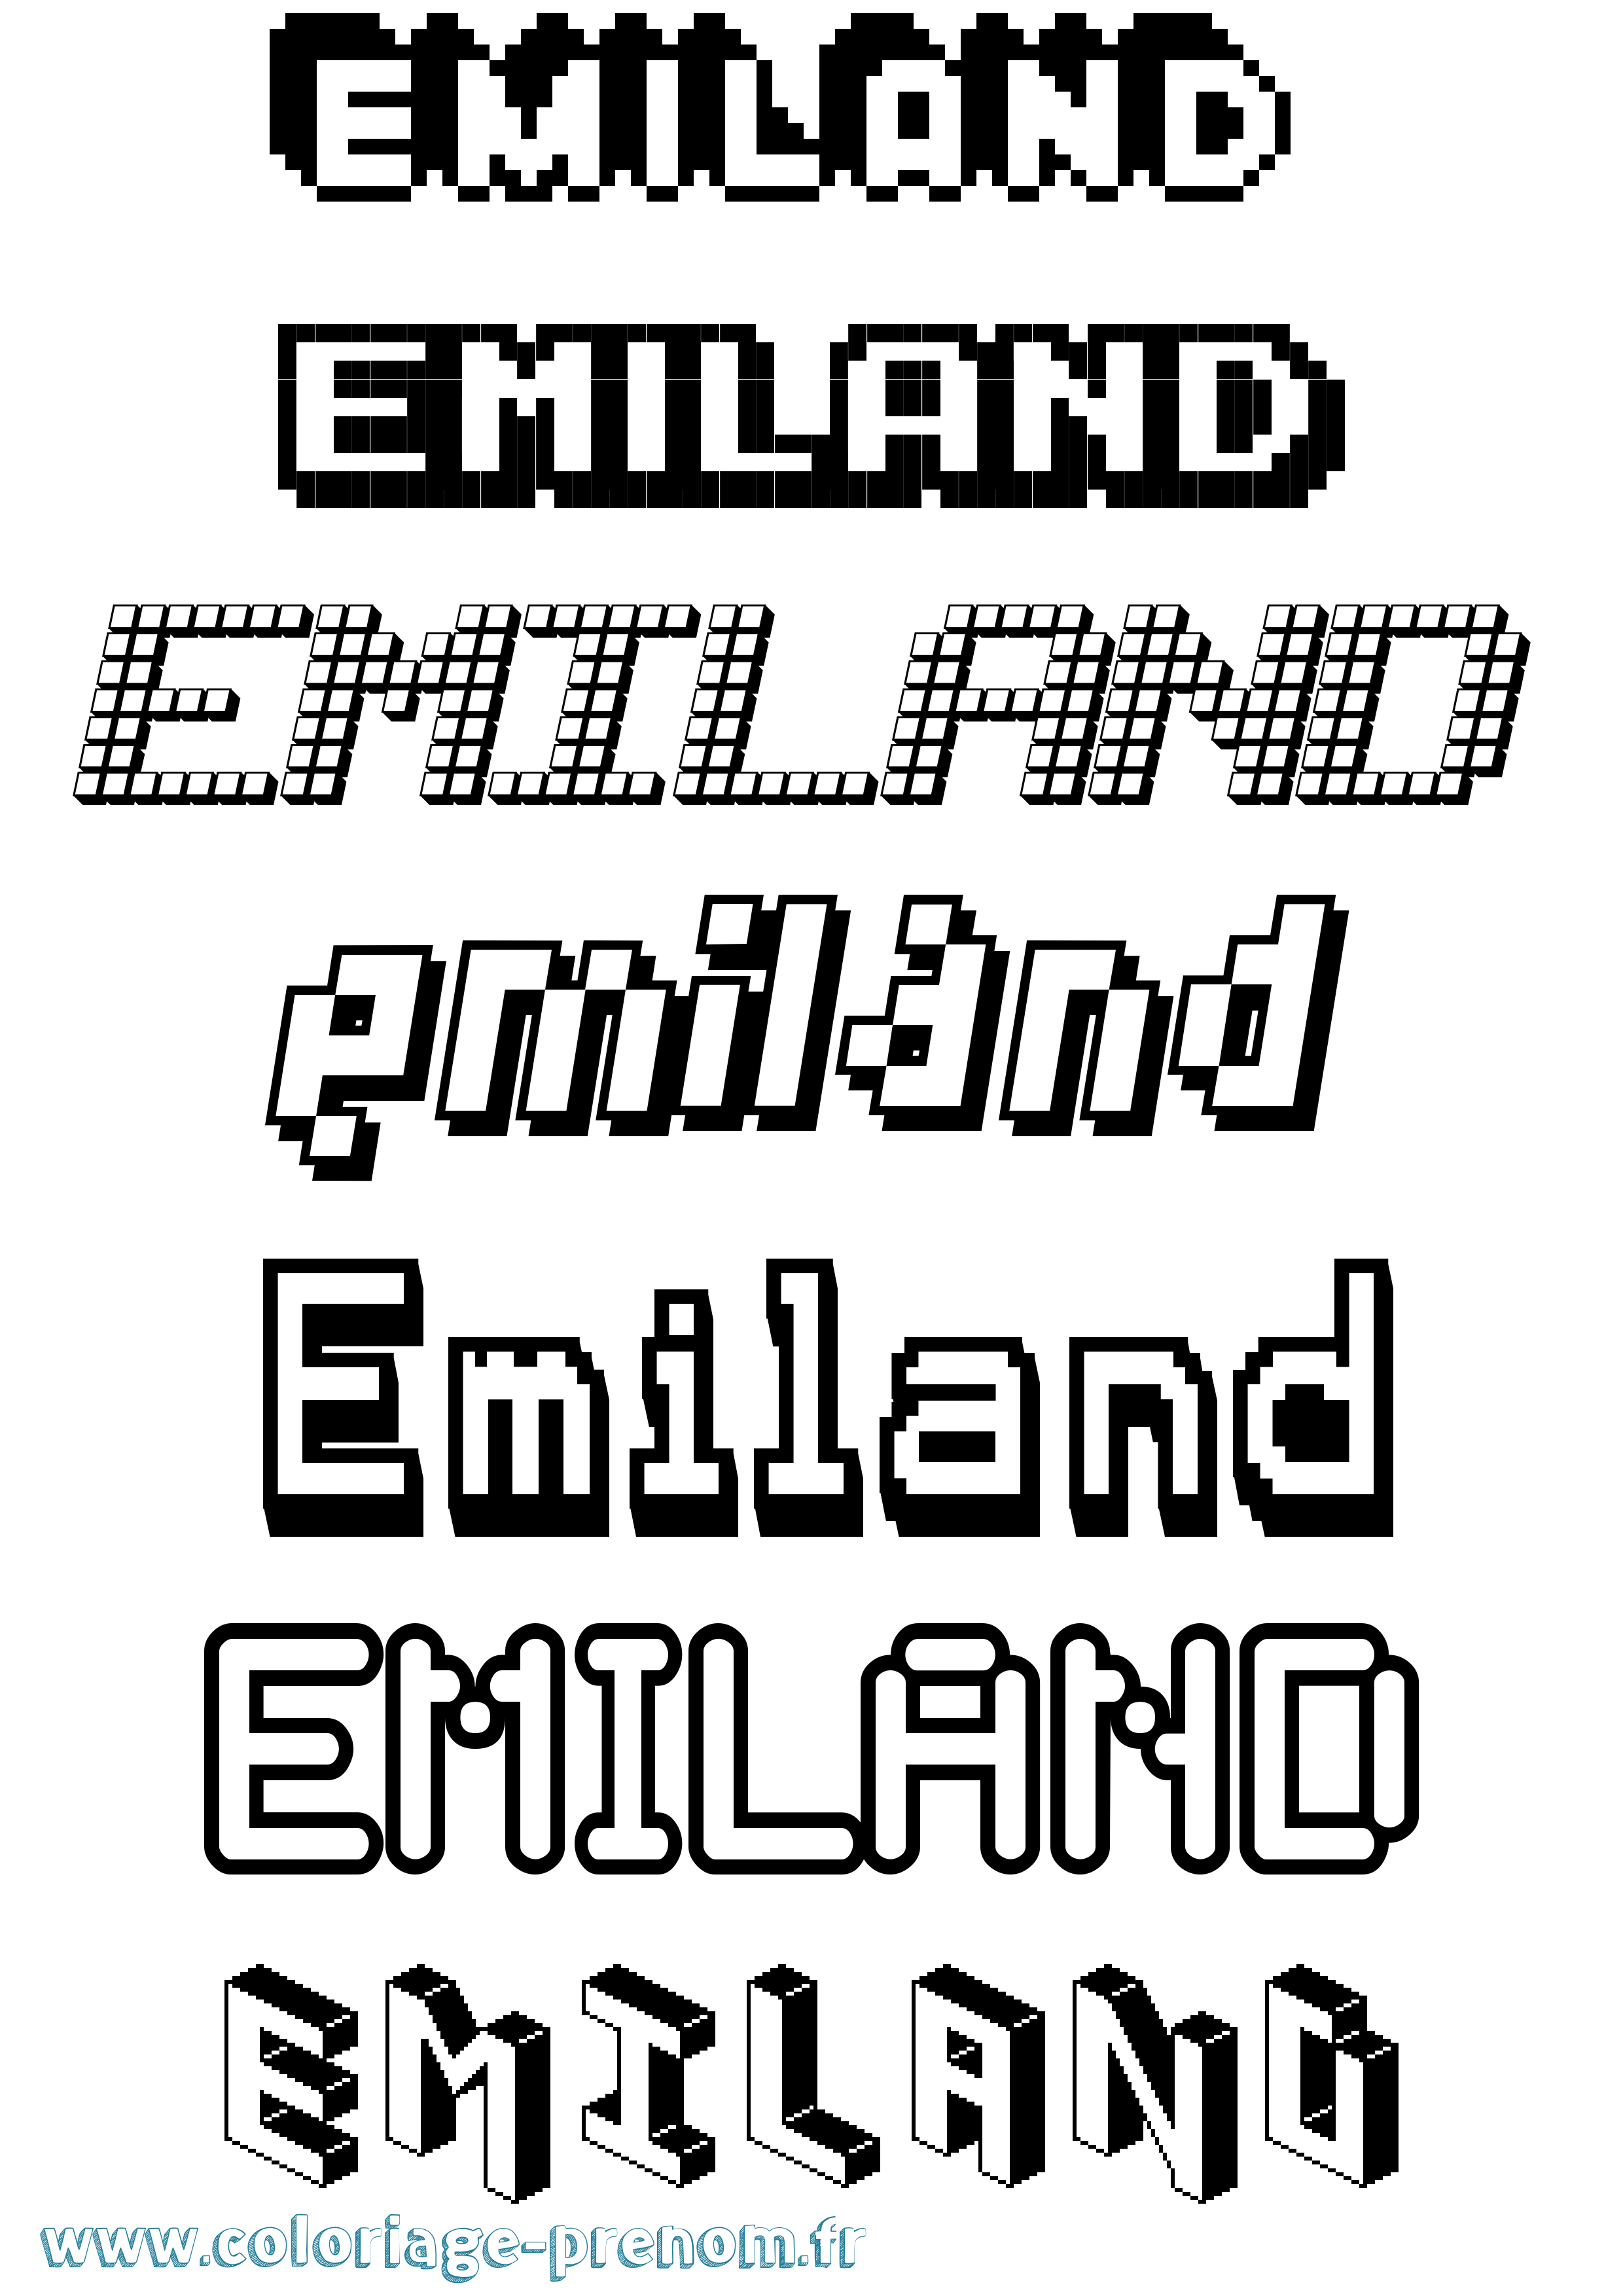 Coloriage prénom Emiland Pixel